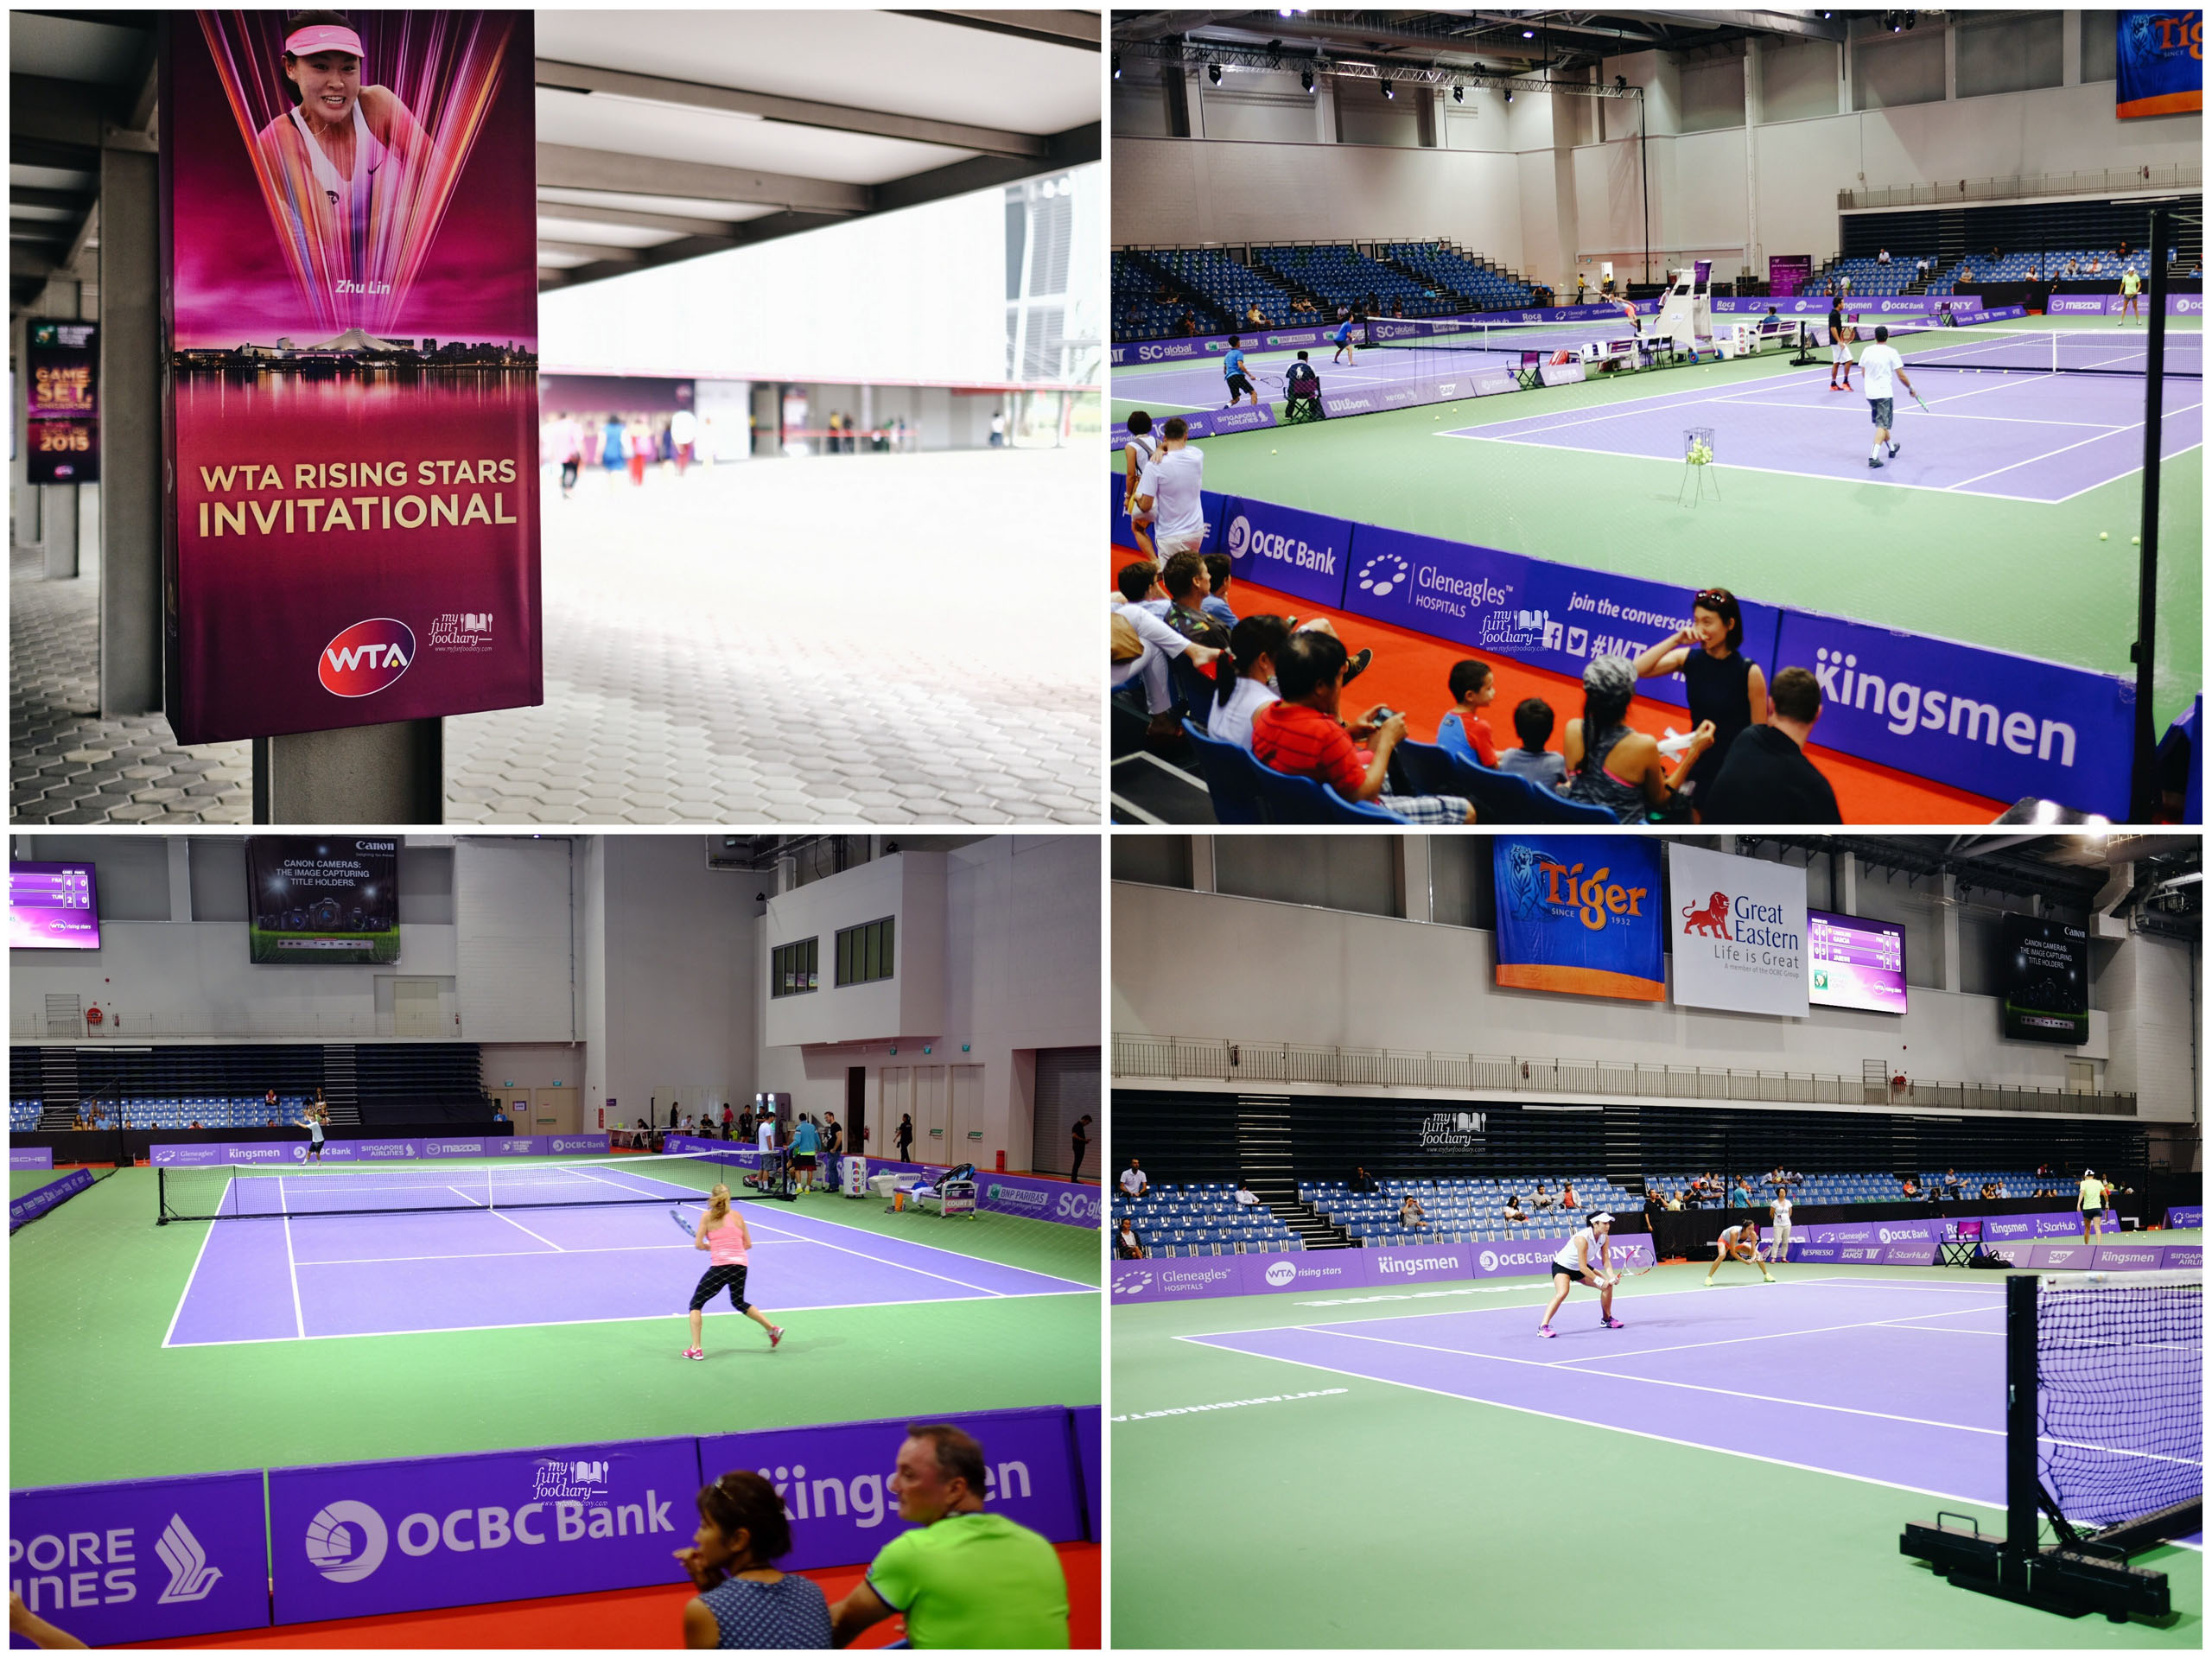 Practice Court at Singapore Sports Hub by Myfunfoodiary